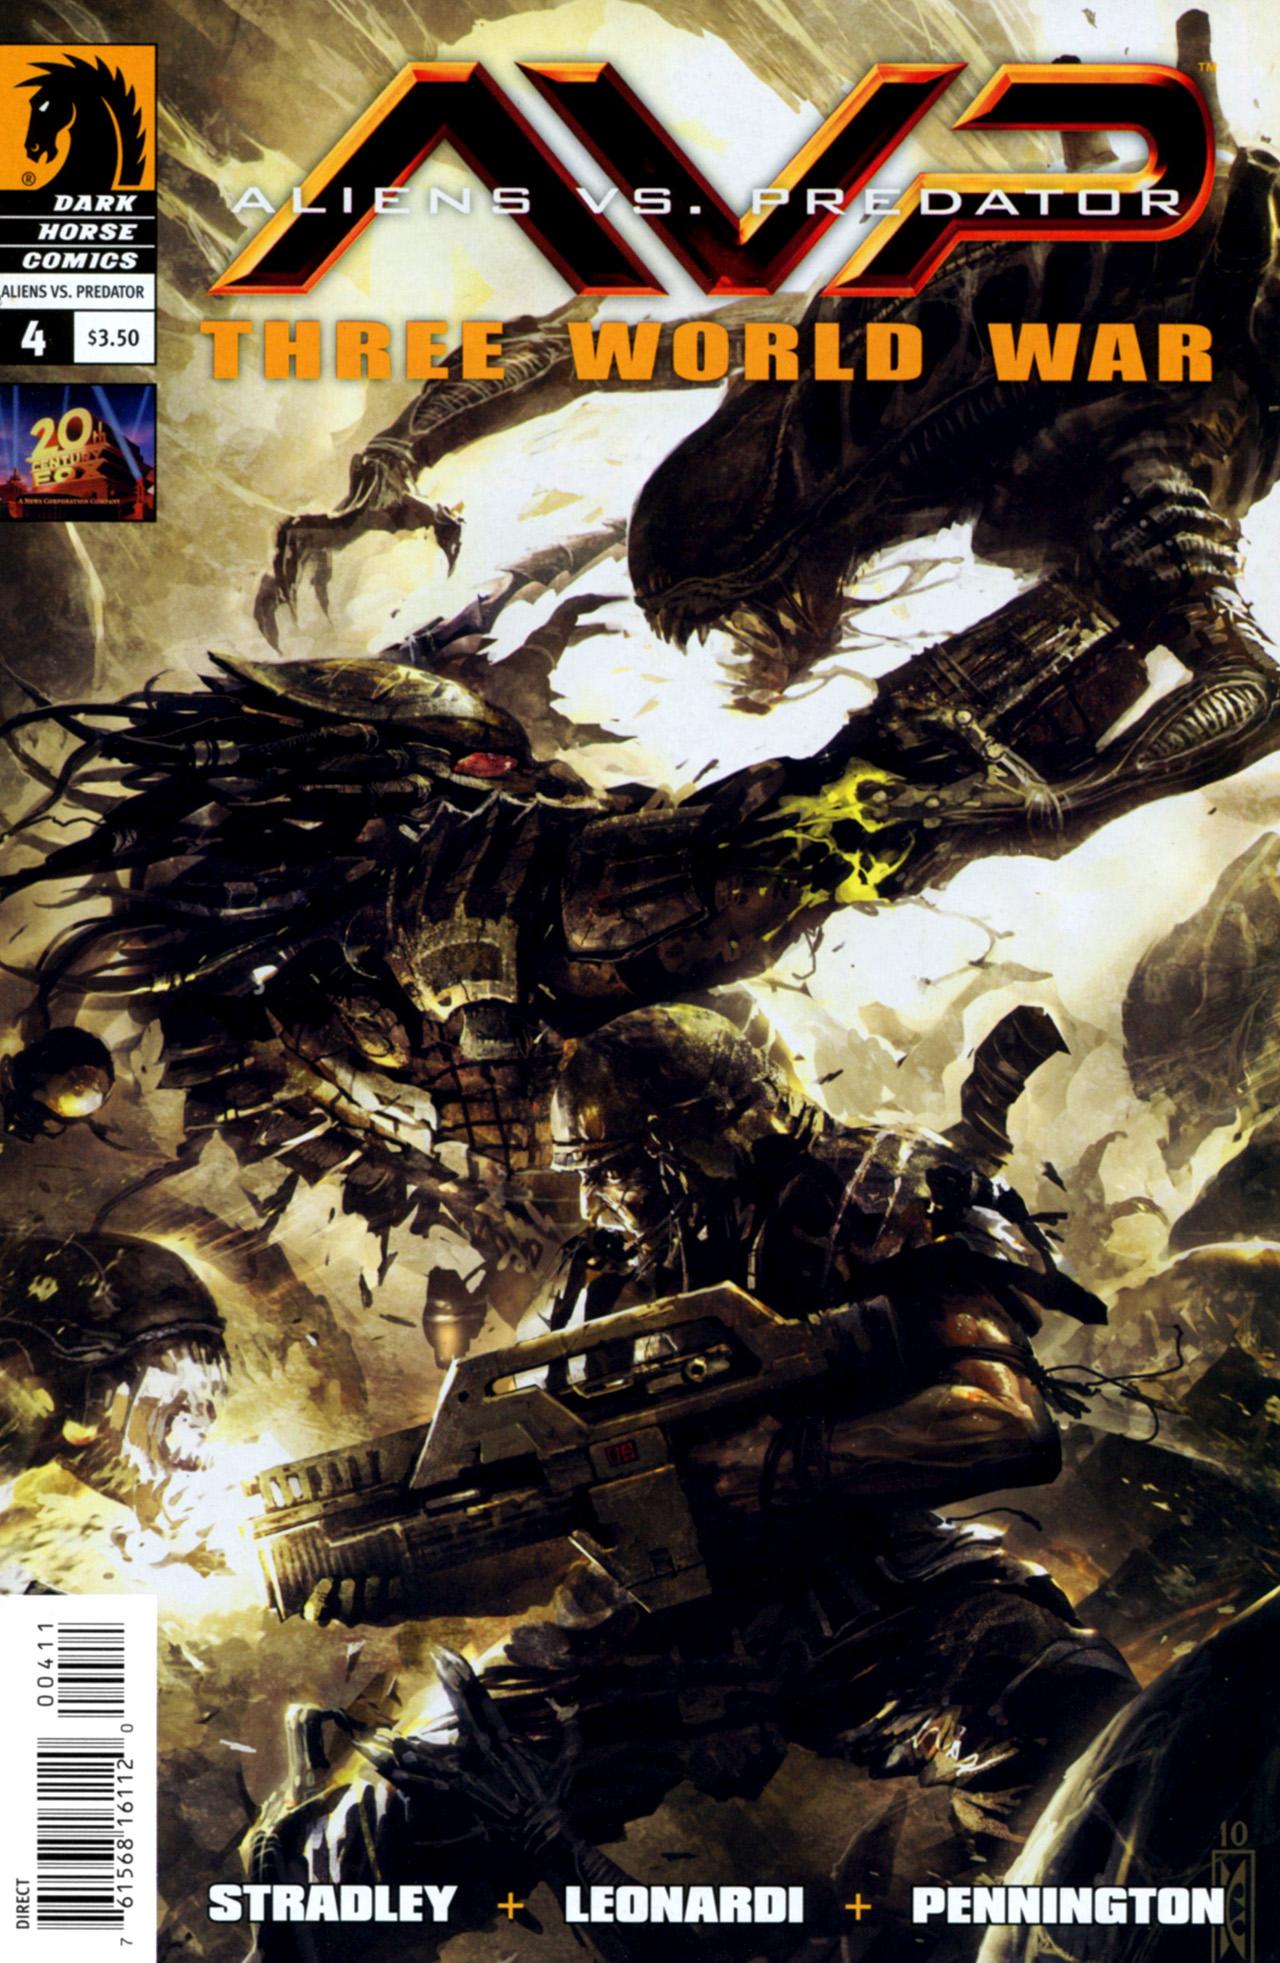 Aliens vs. Predator: Three World War Vol. 1 #4